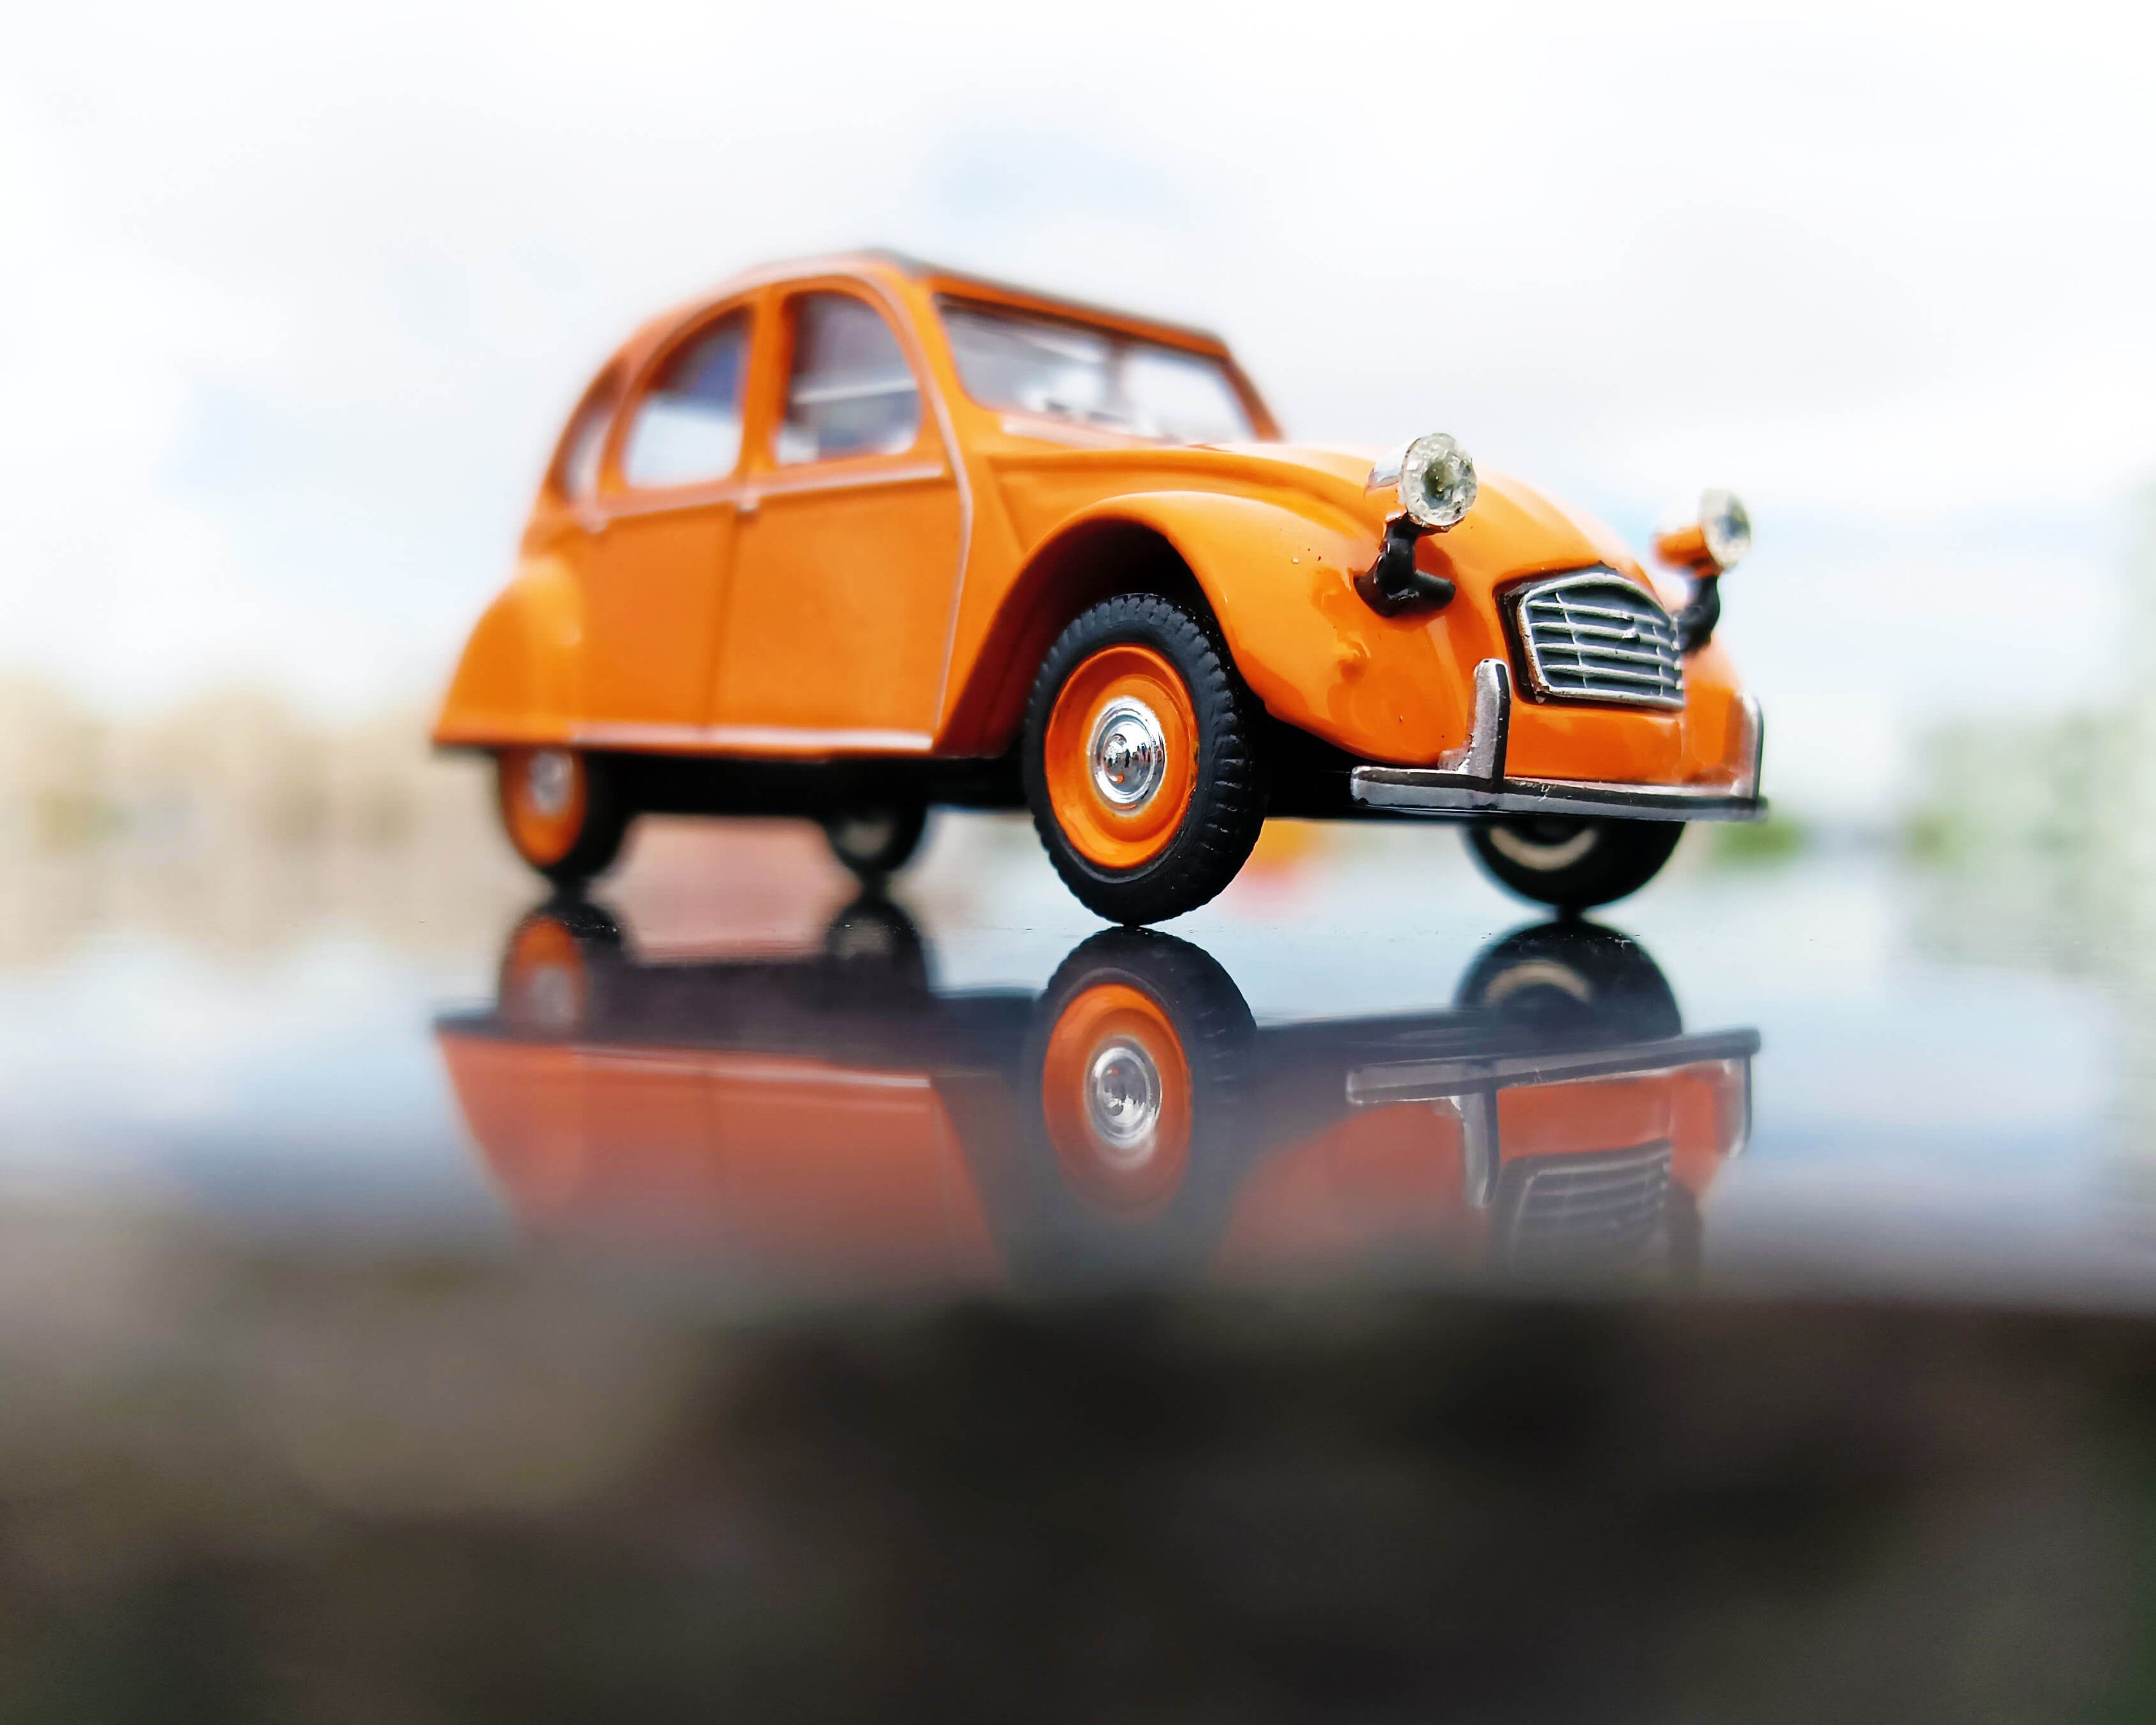 Car Models, Miniature Cars